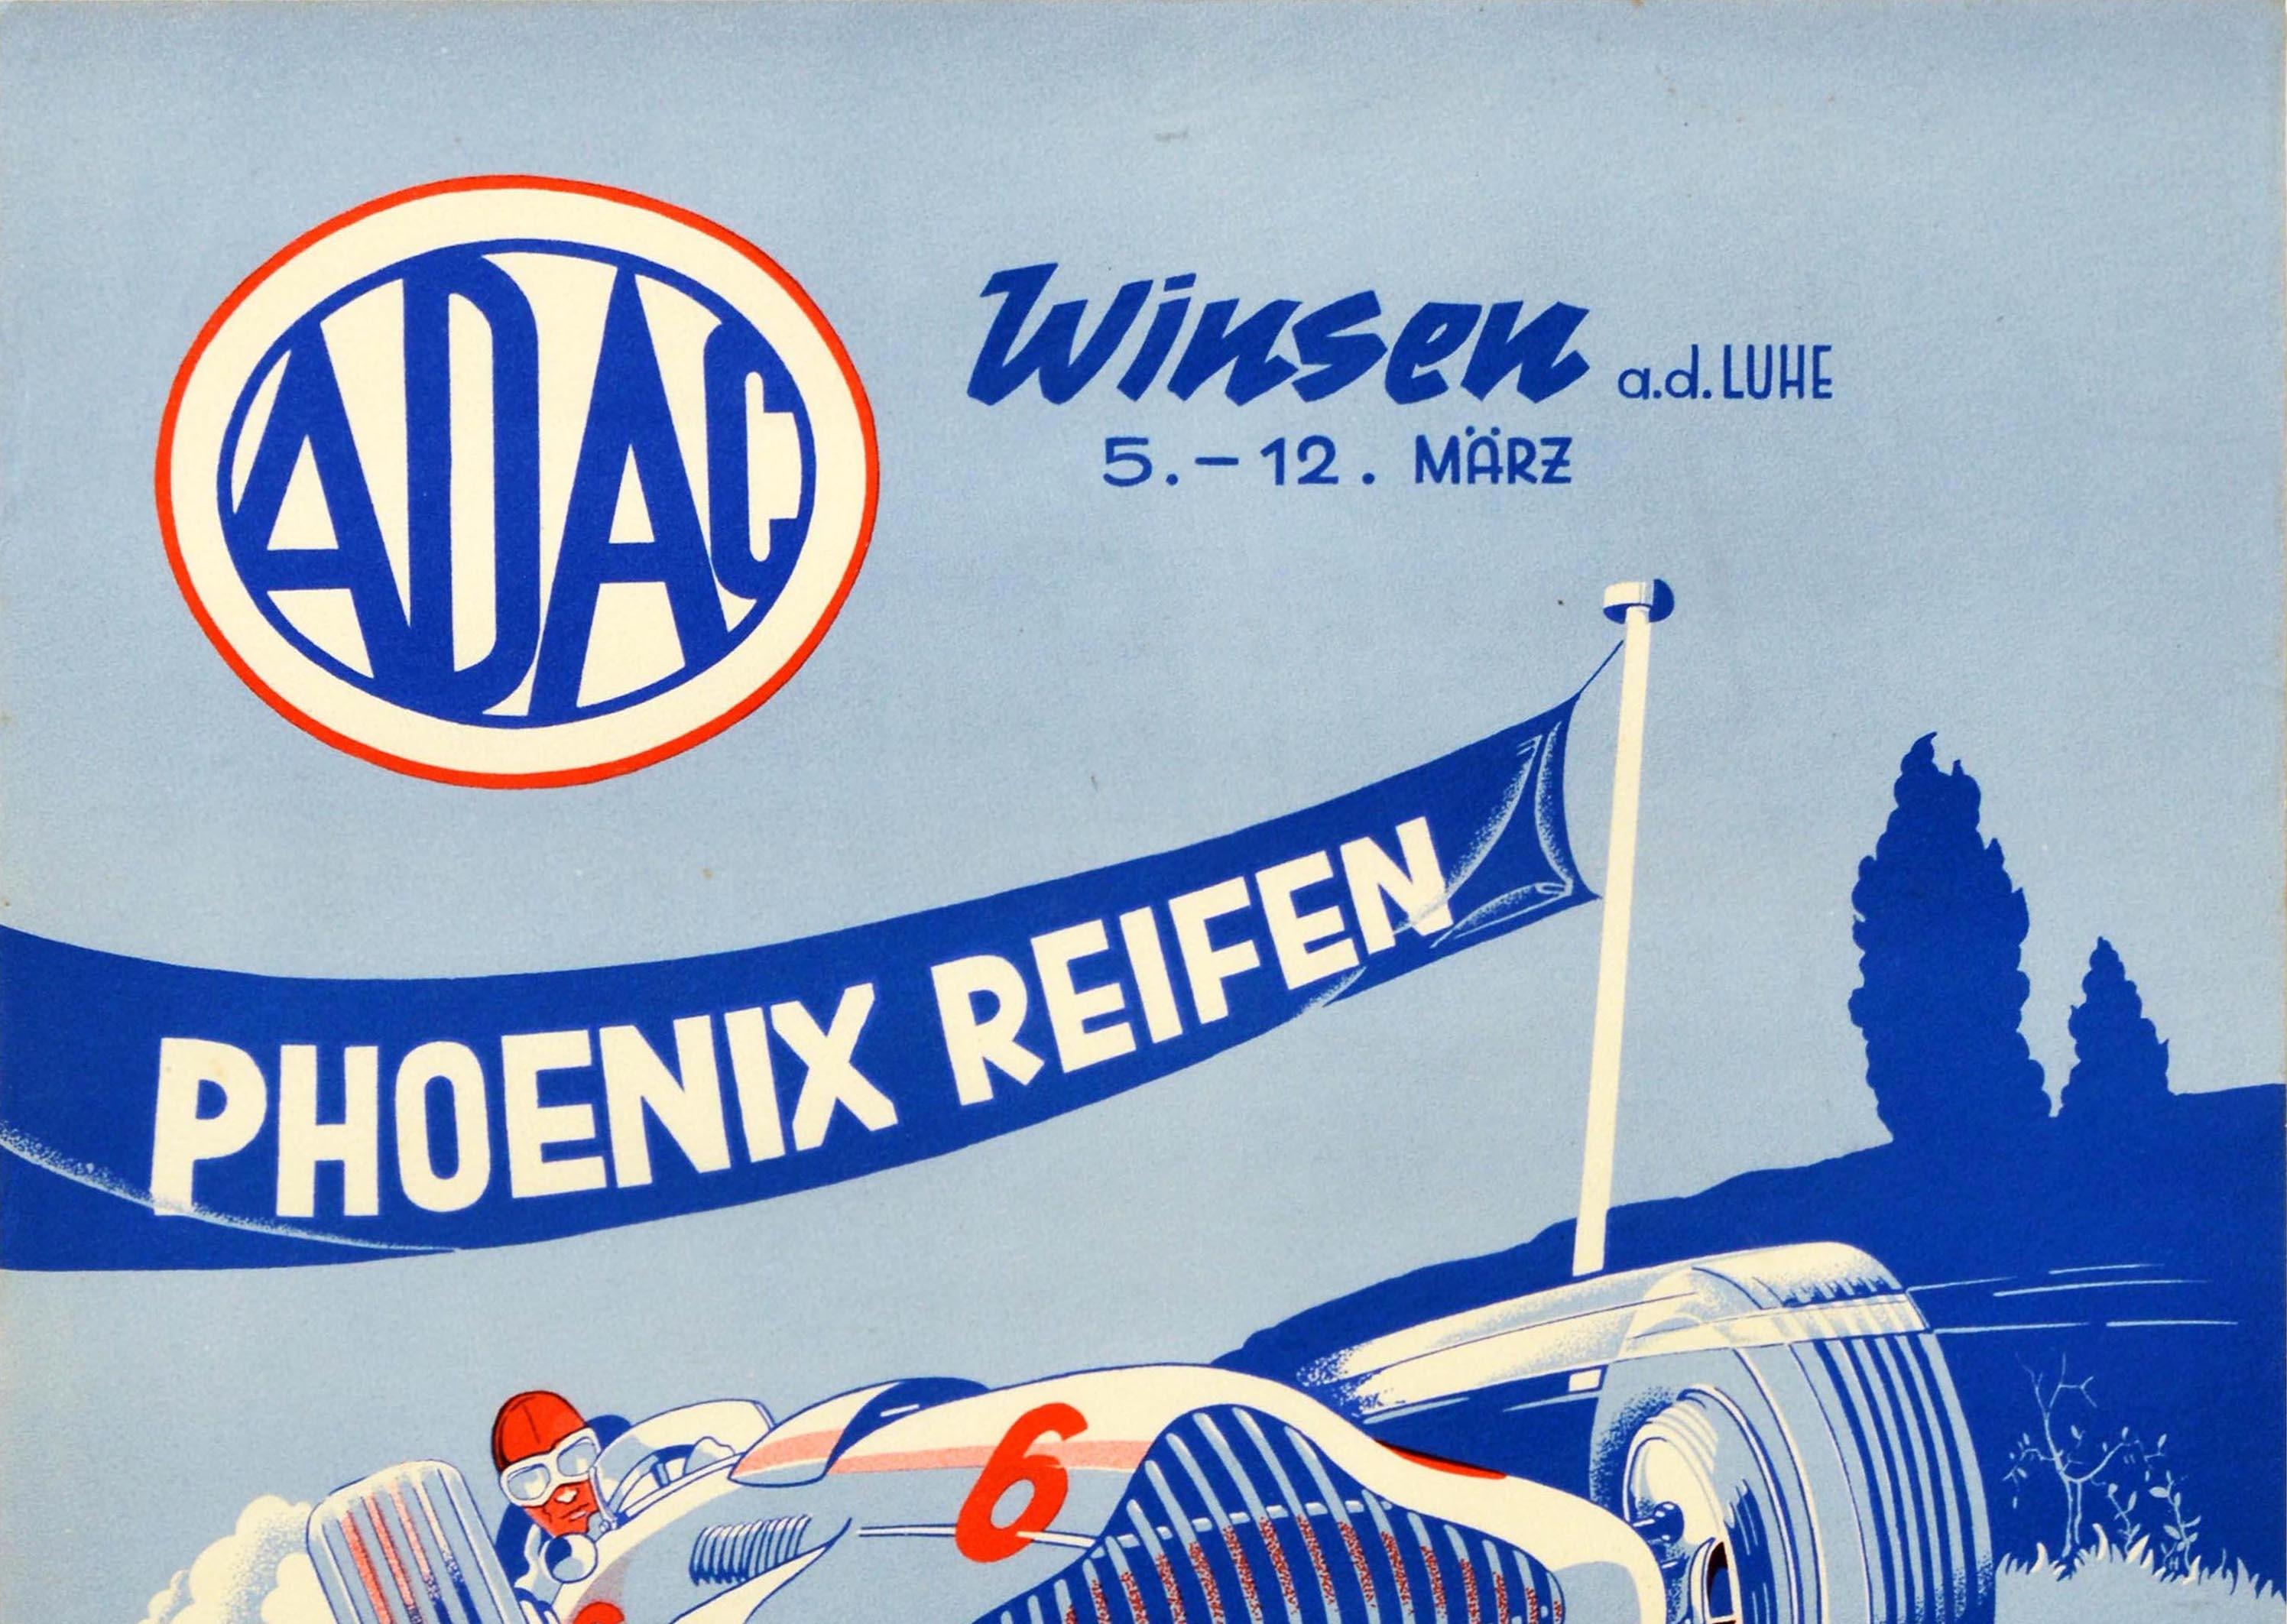 German Original Vintage Poster Motorsport Car Exhibition ADAC Phoenix Reifen Tires Ad For Sale